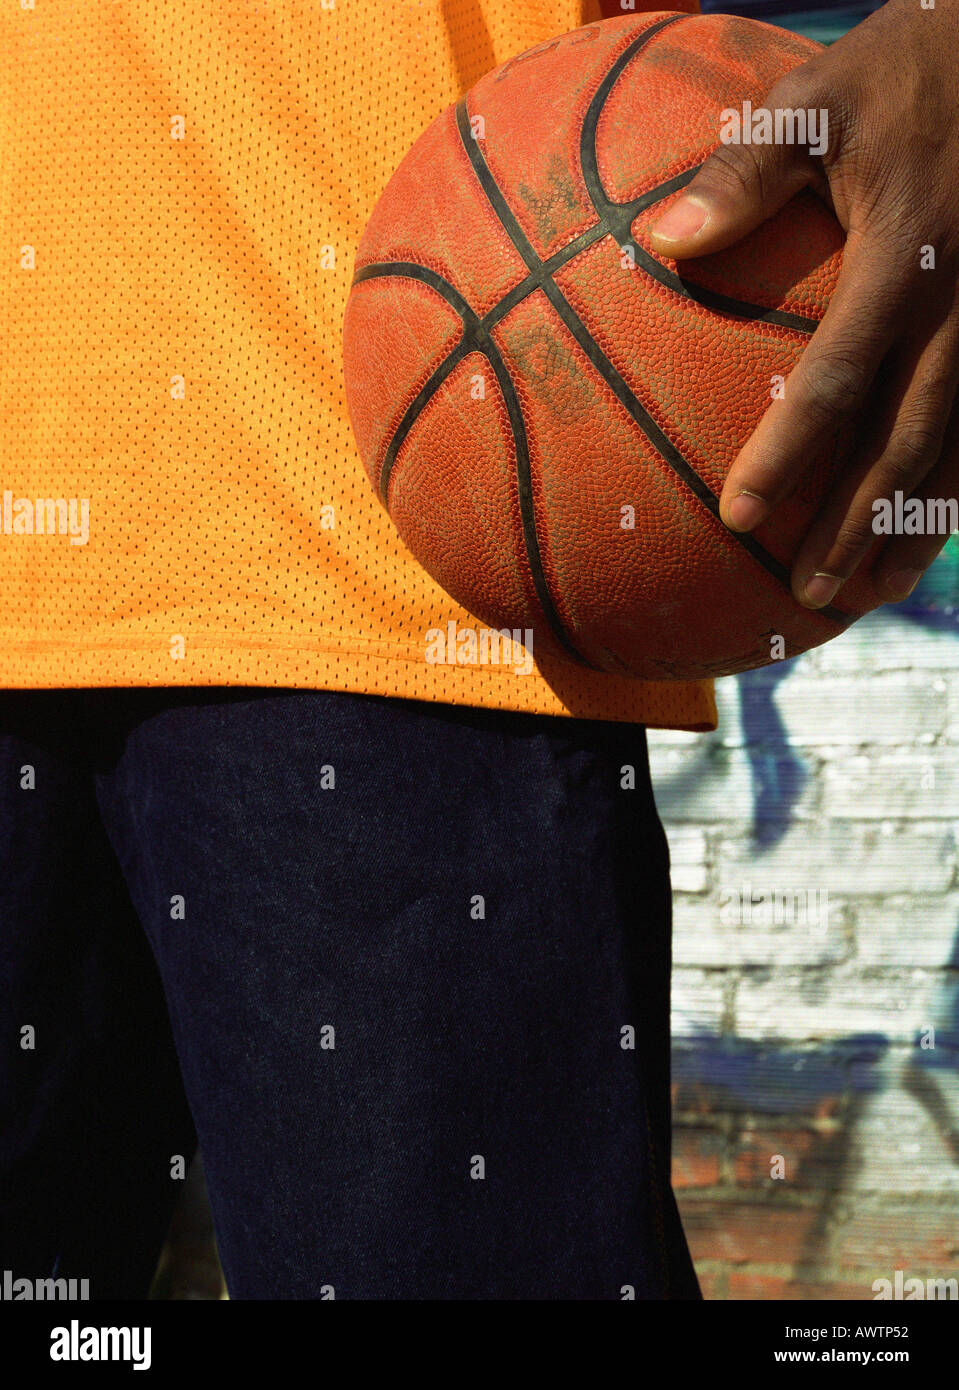 Man holding basketball, close-up Stock Photo